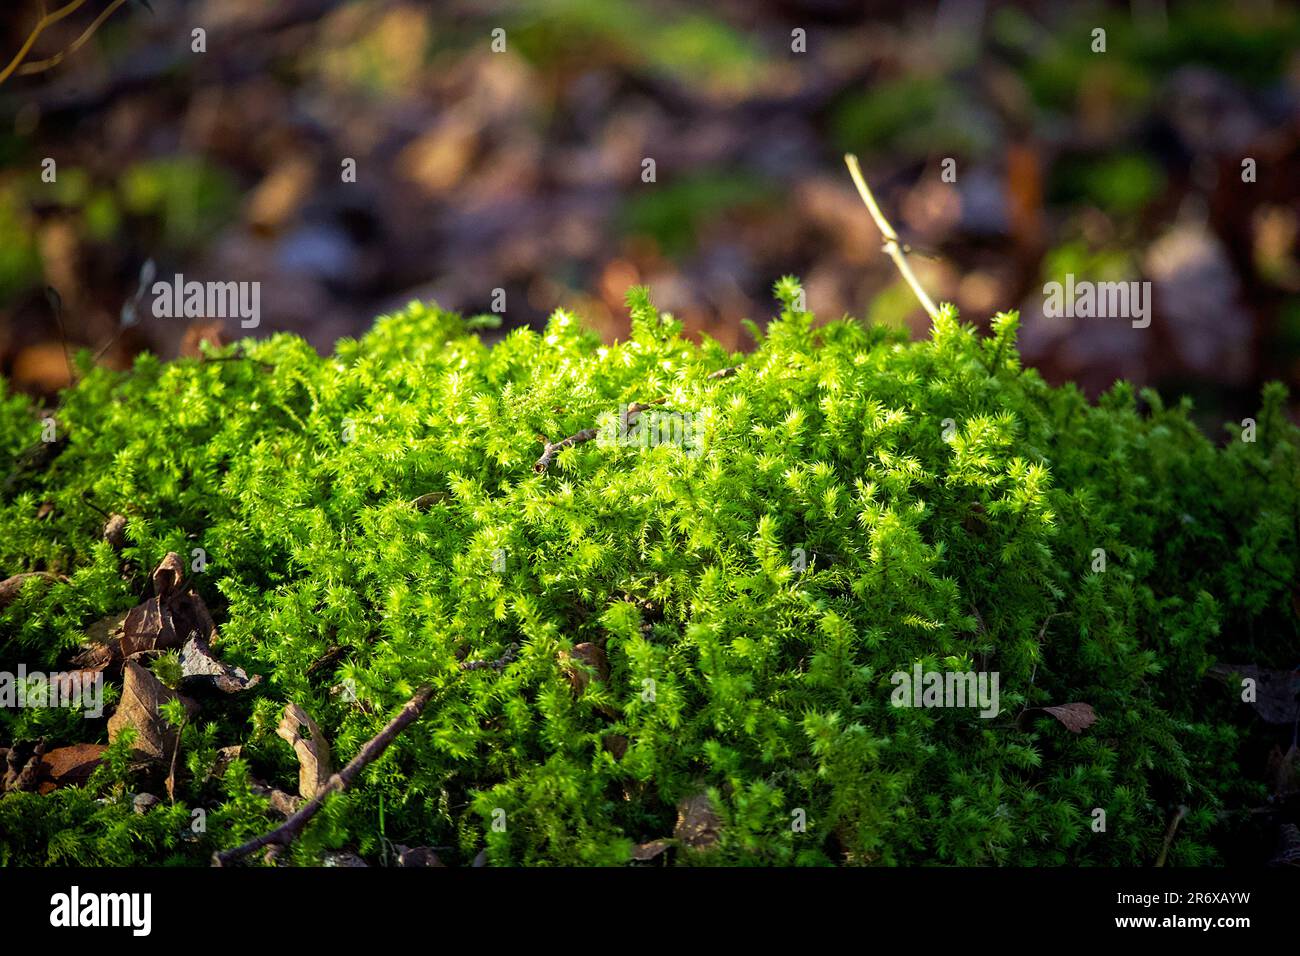 Moss at close range Stock Photo